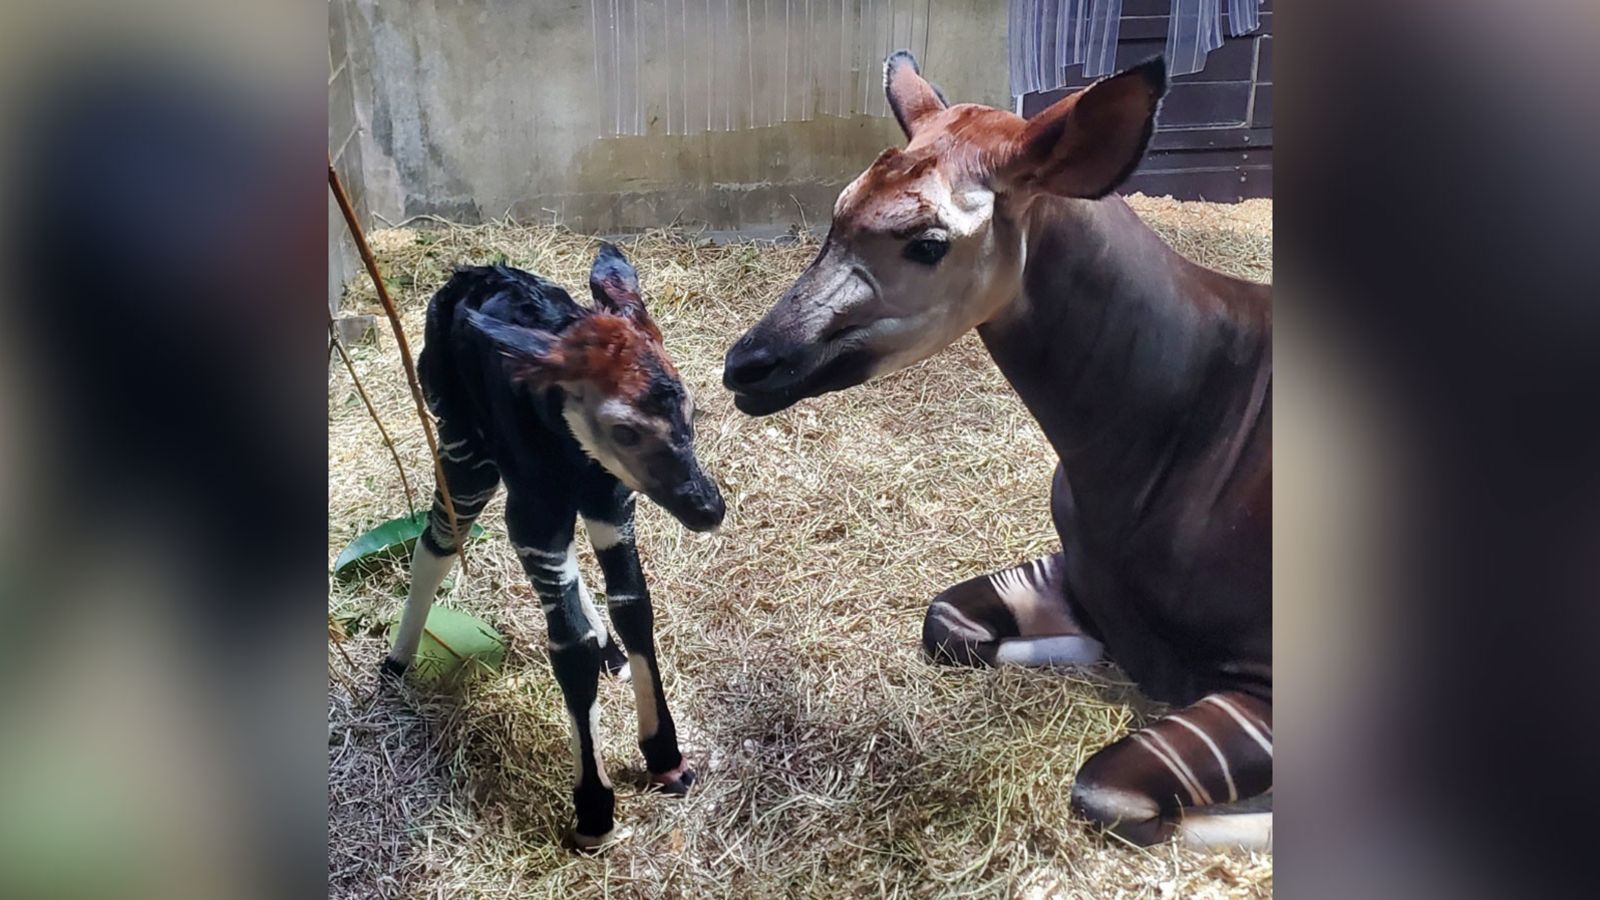 A rare and endangered okapi was born at the Cincinnati Zoo